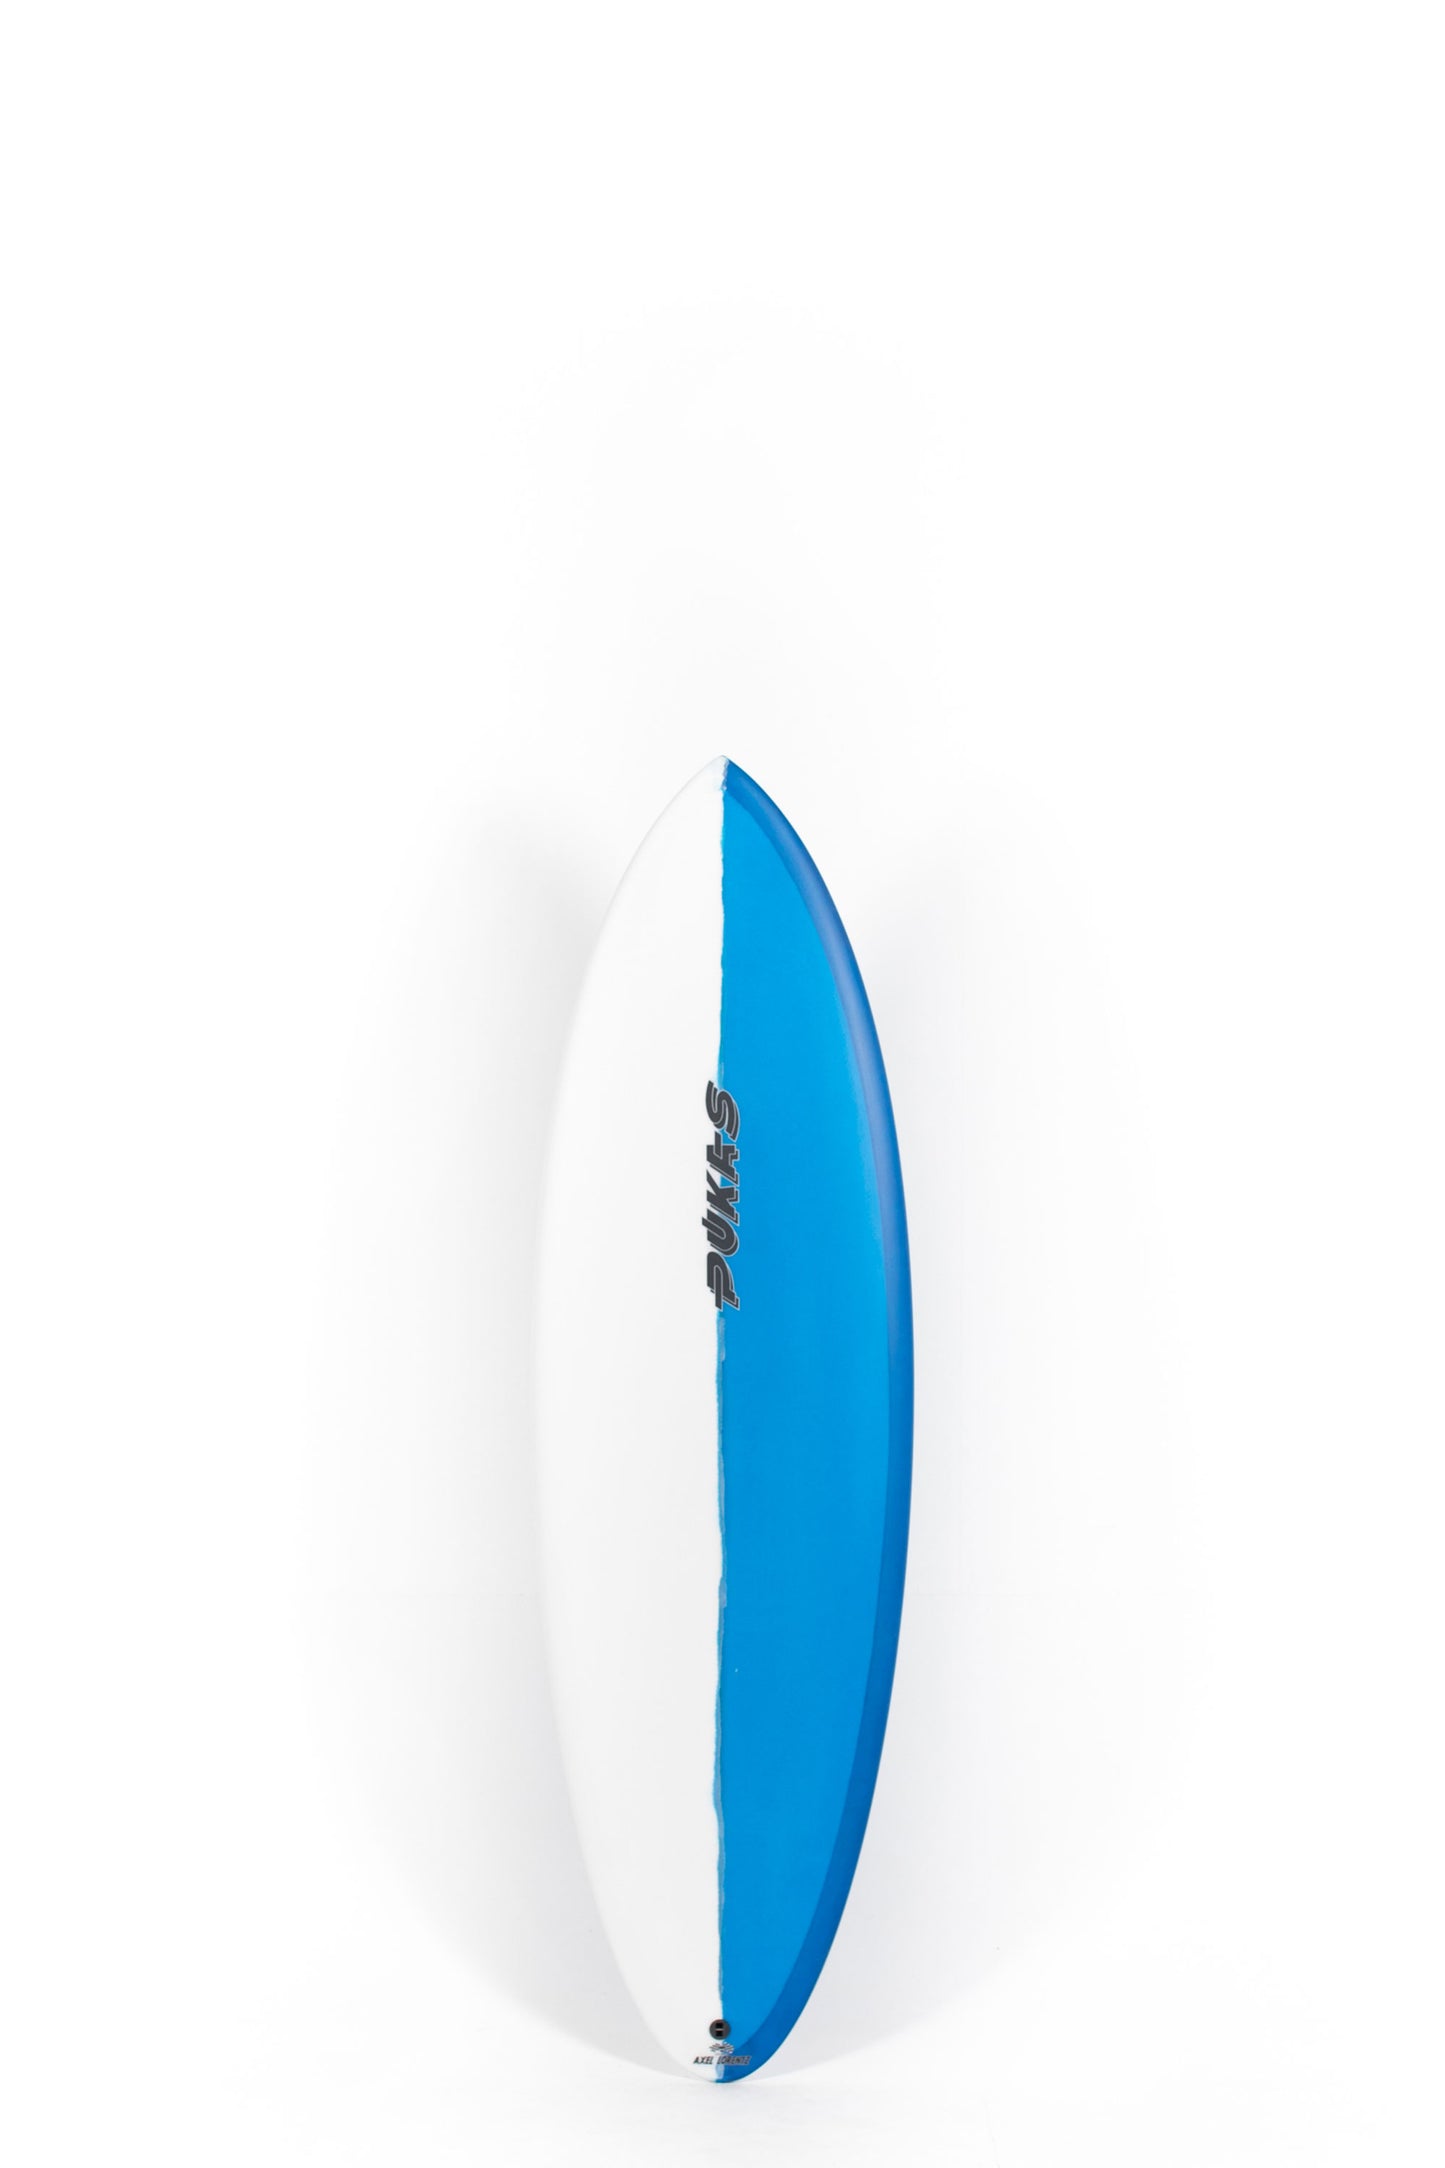 Pukas Surf Shop - Pukas Surfboard - ORIGINAL 69 by Axel Lorentz - 5’8” x 19,75 x 2,37 - 29,2L - AX07924